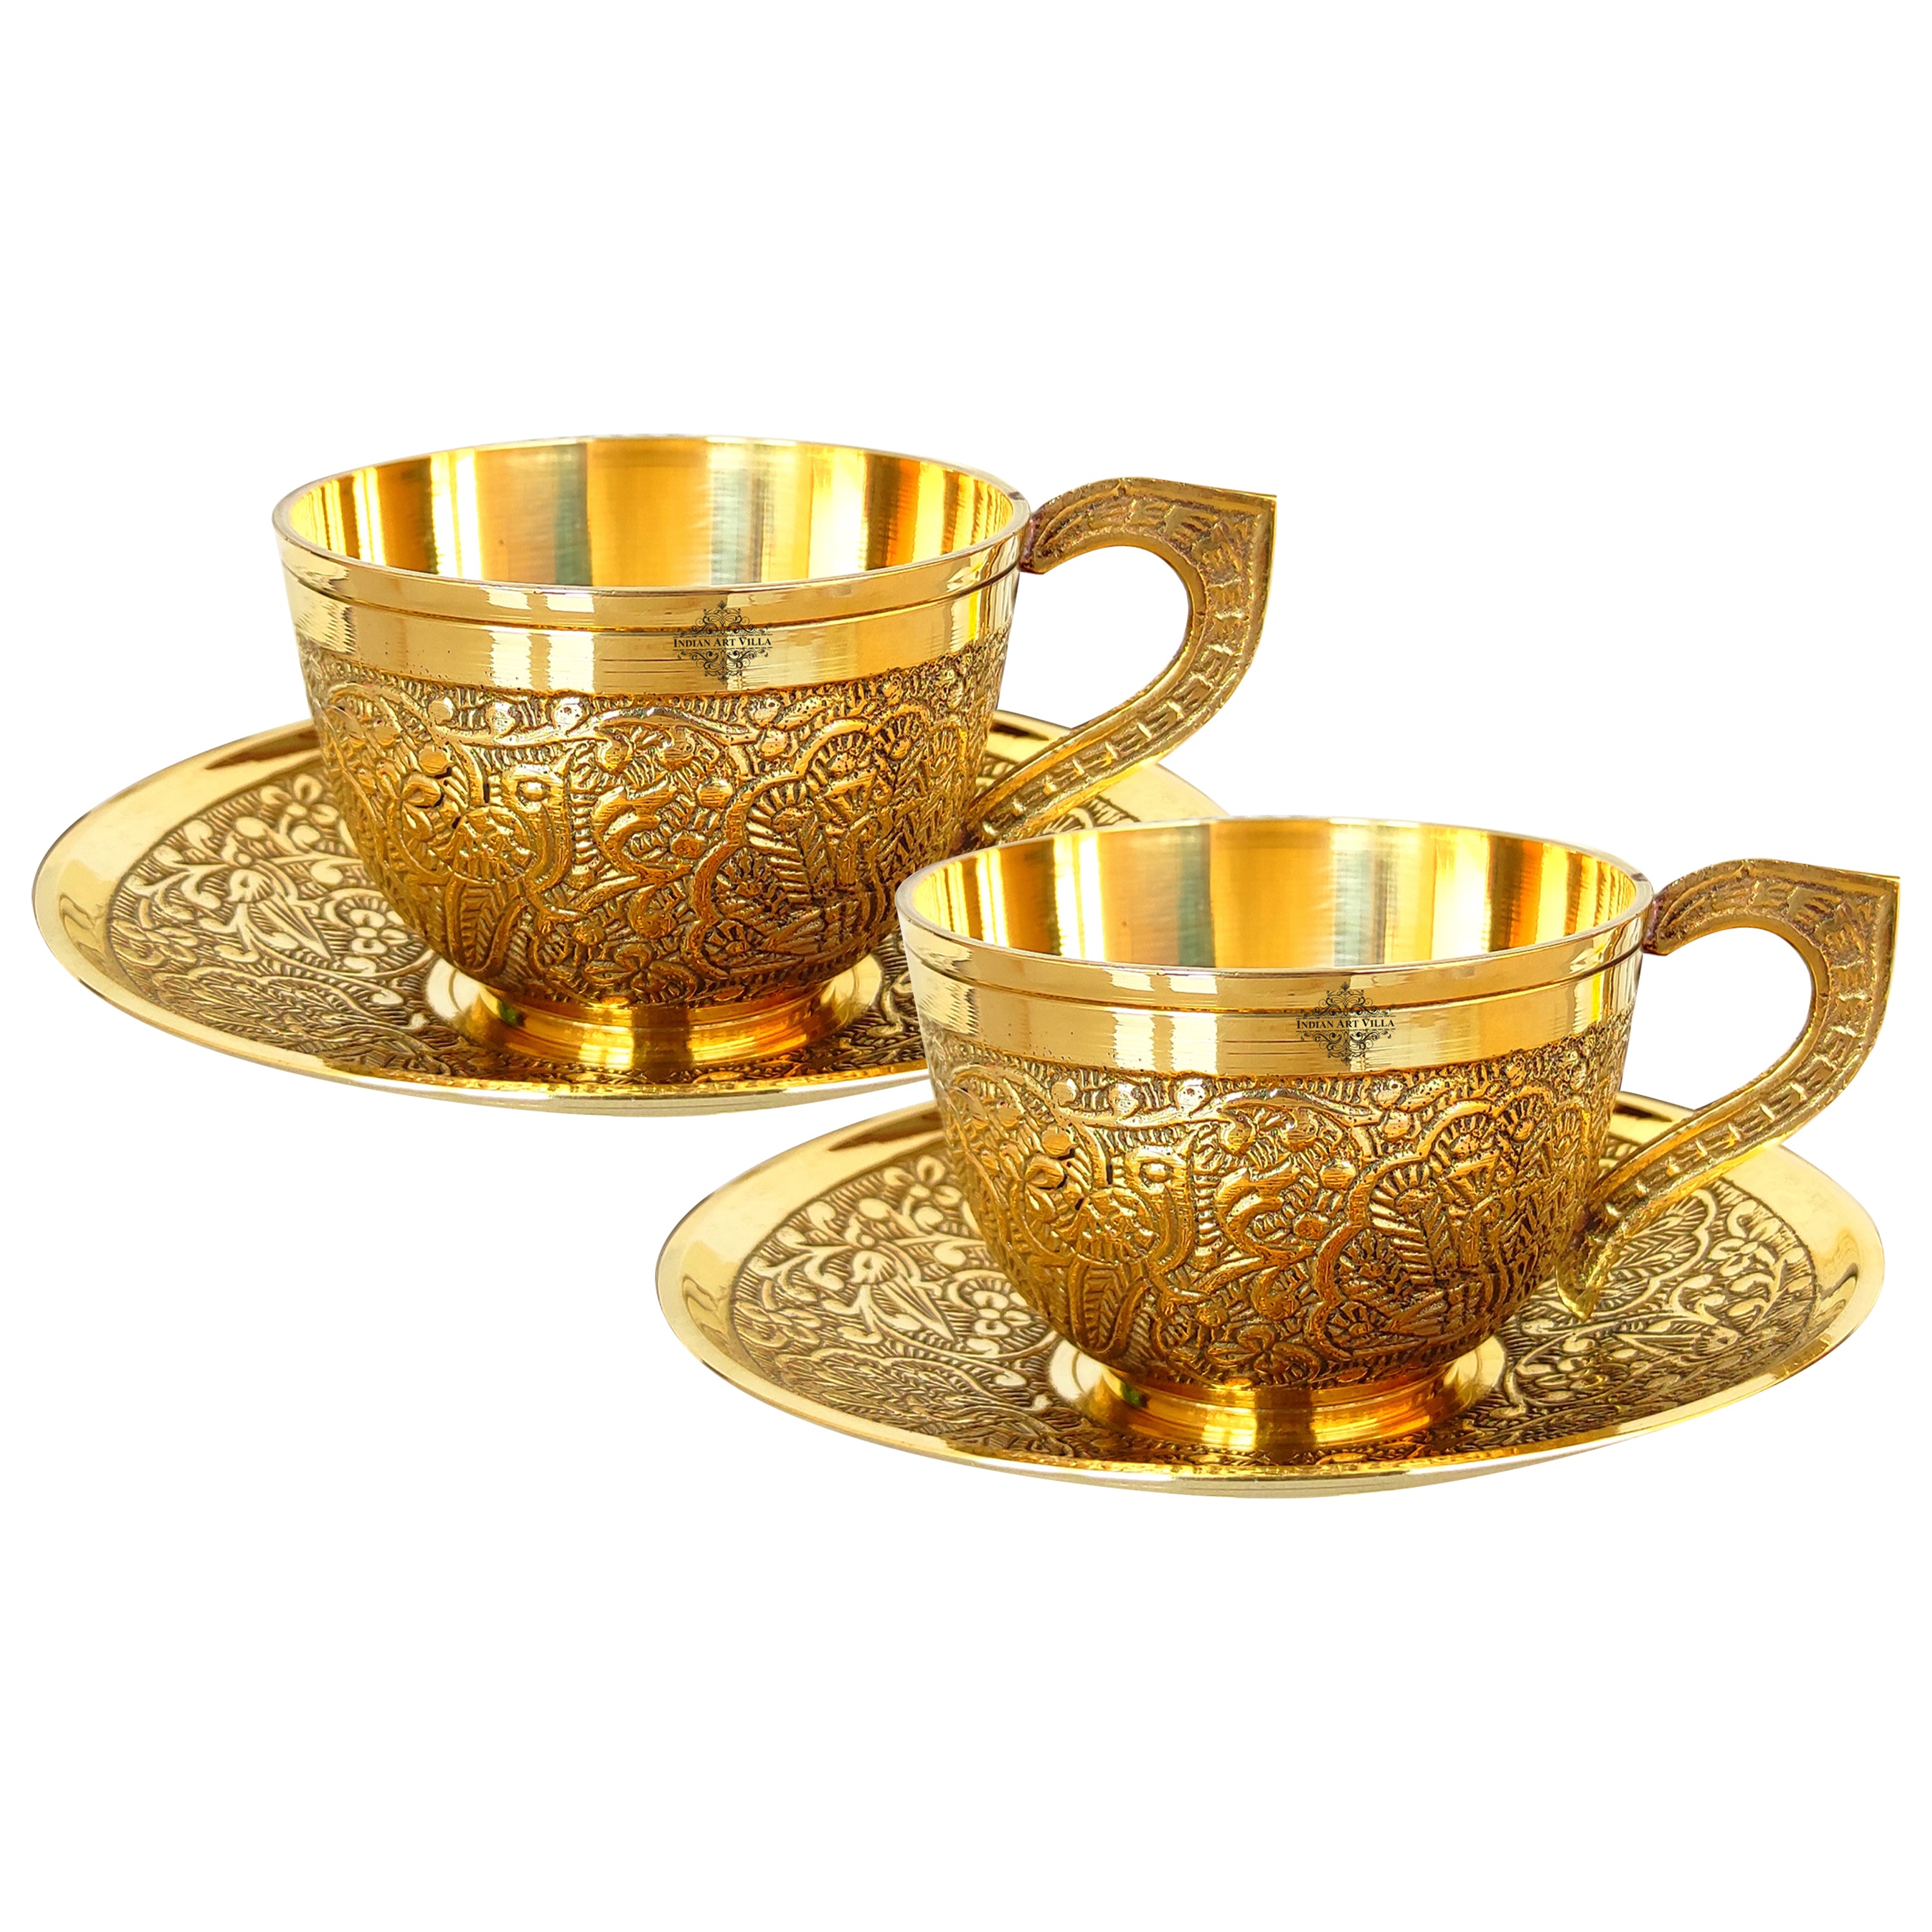 Shop Pure Brass Antique Tea Cup with Saucer